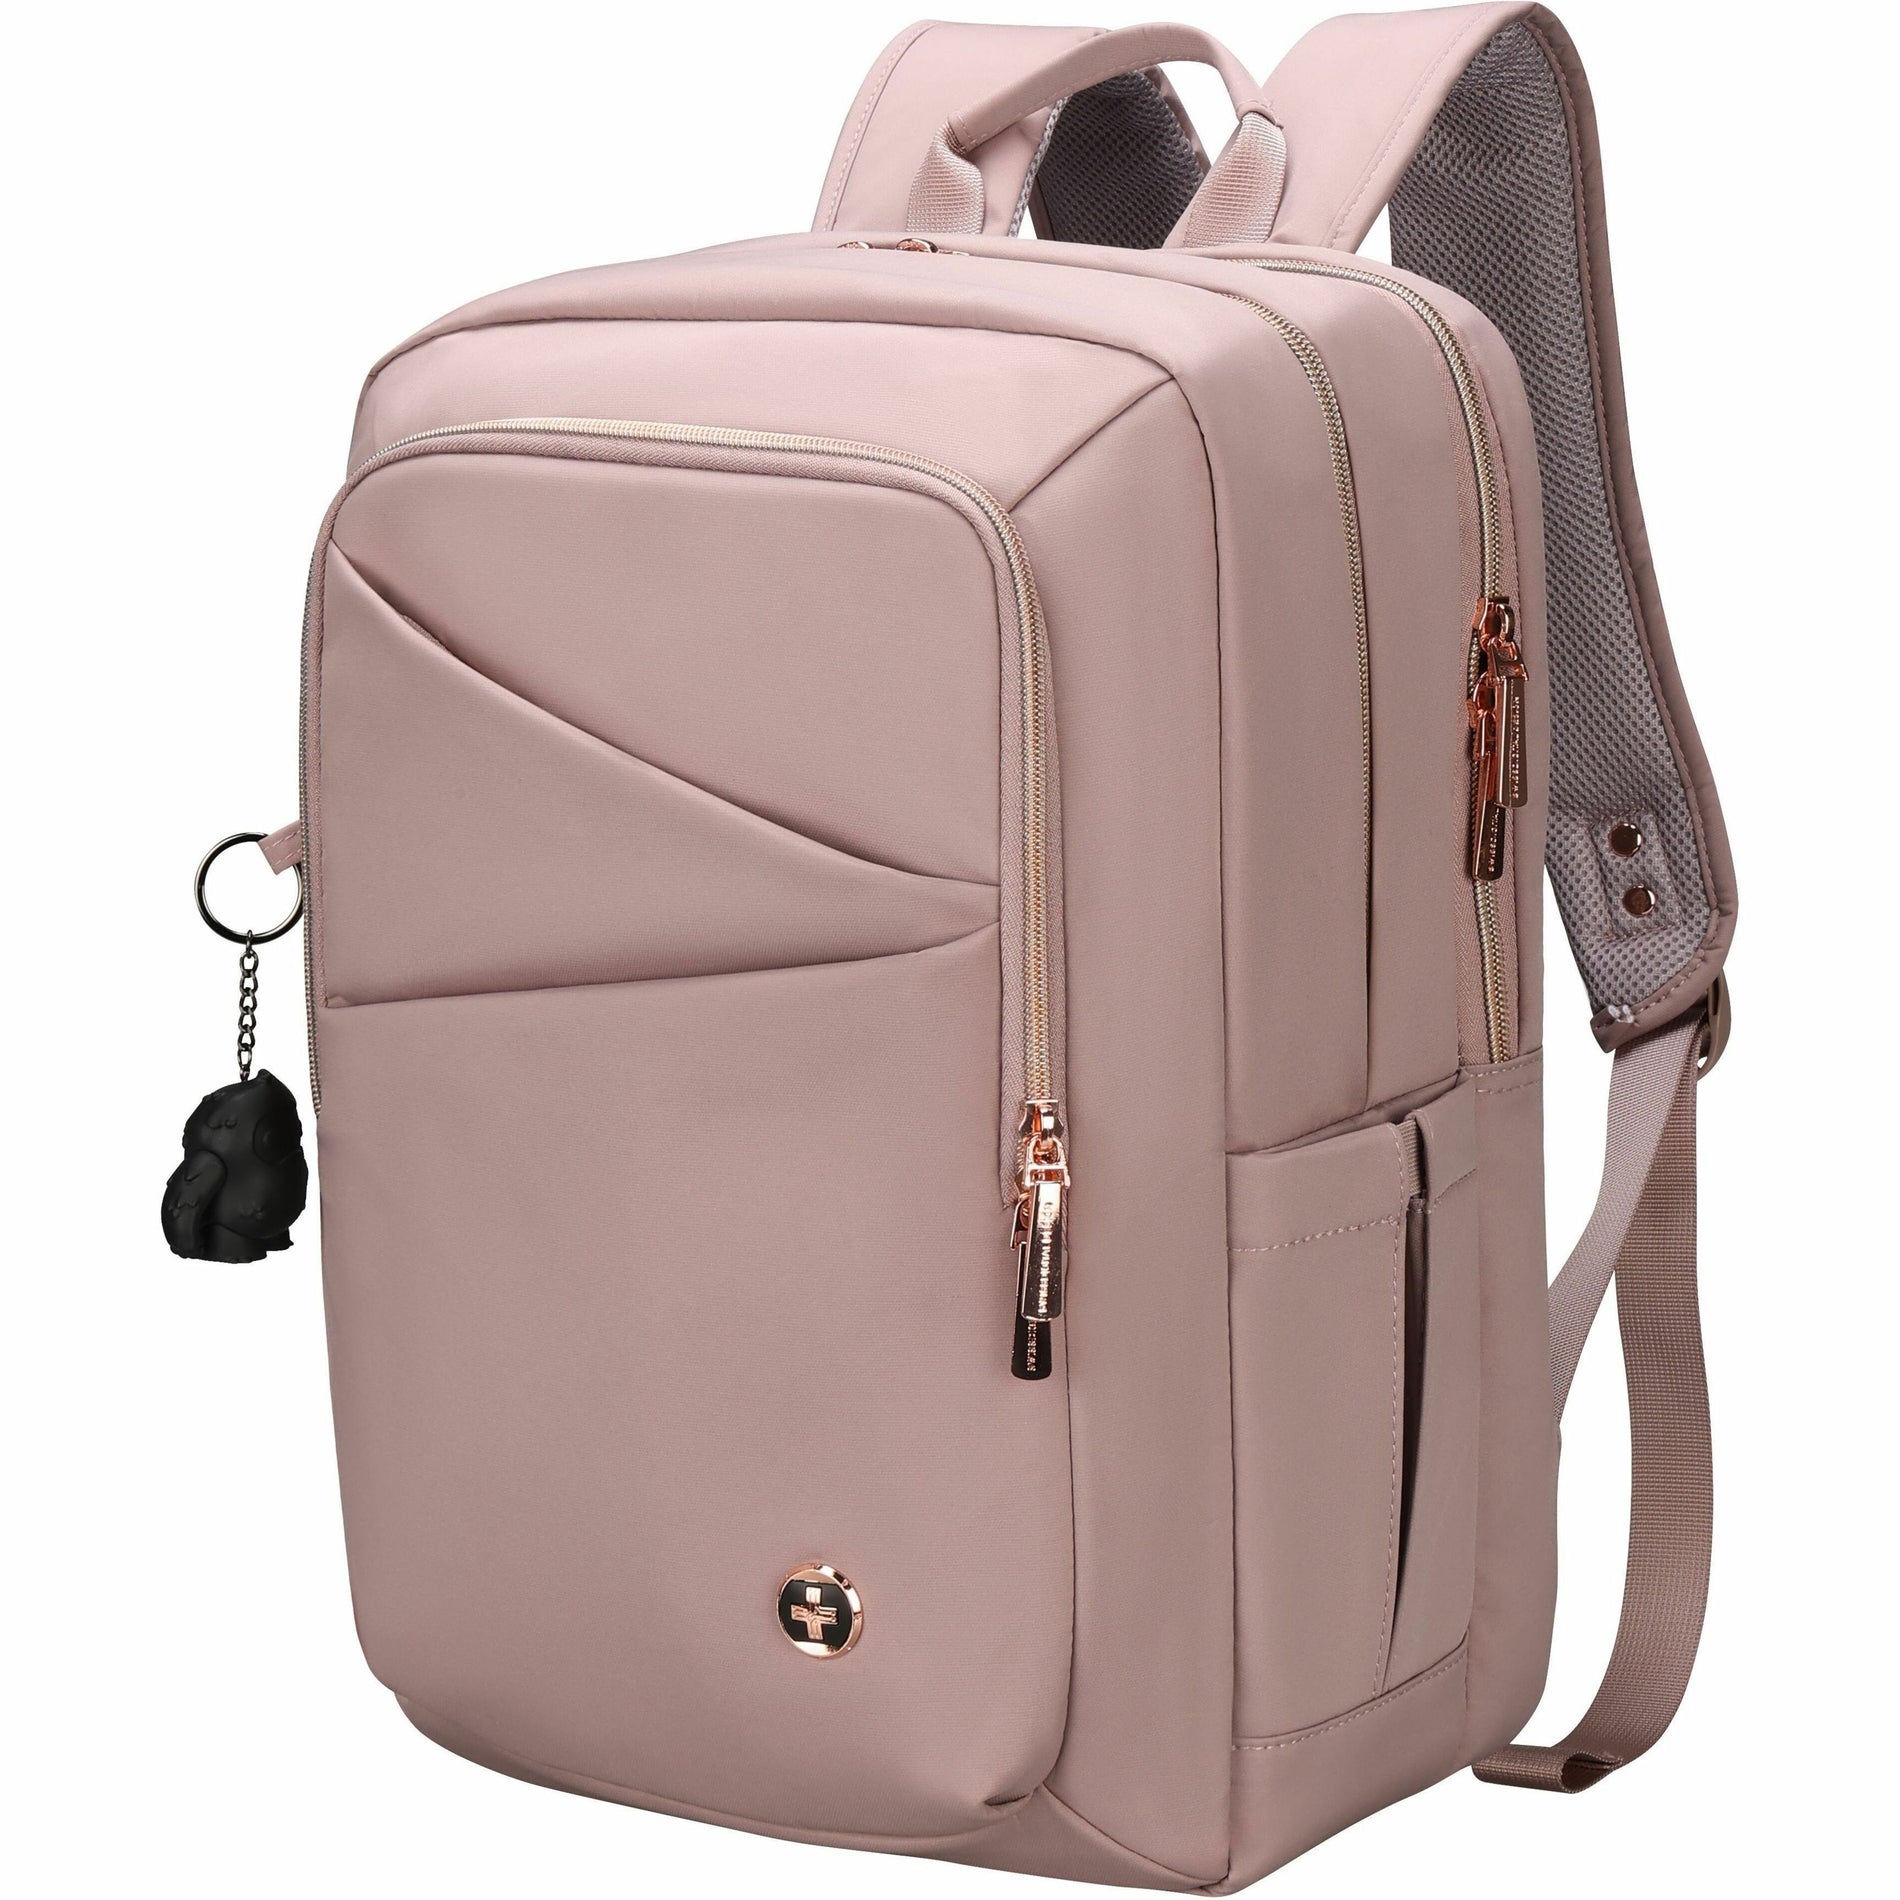 Swissdigital Design SD1645-82 KATY ROSE NG Carrying Case, Backpack with USB Charging Port, Ergonomic Design, LED Light, Ventilation, Breathable Back, Eco-friendly, Keyclip, Padded Compartment, RFID Blocking Pocket